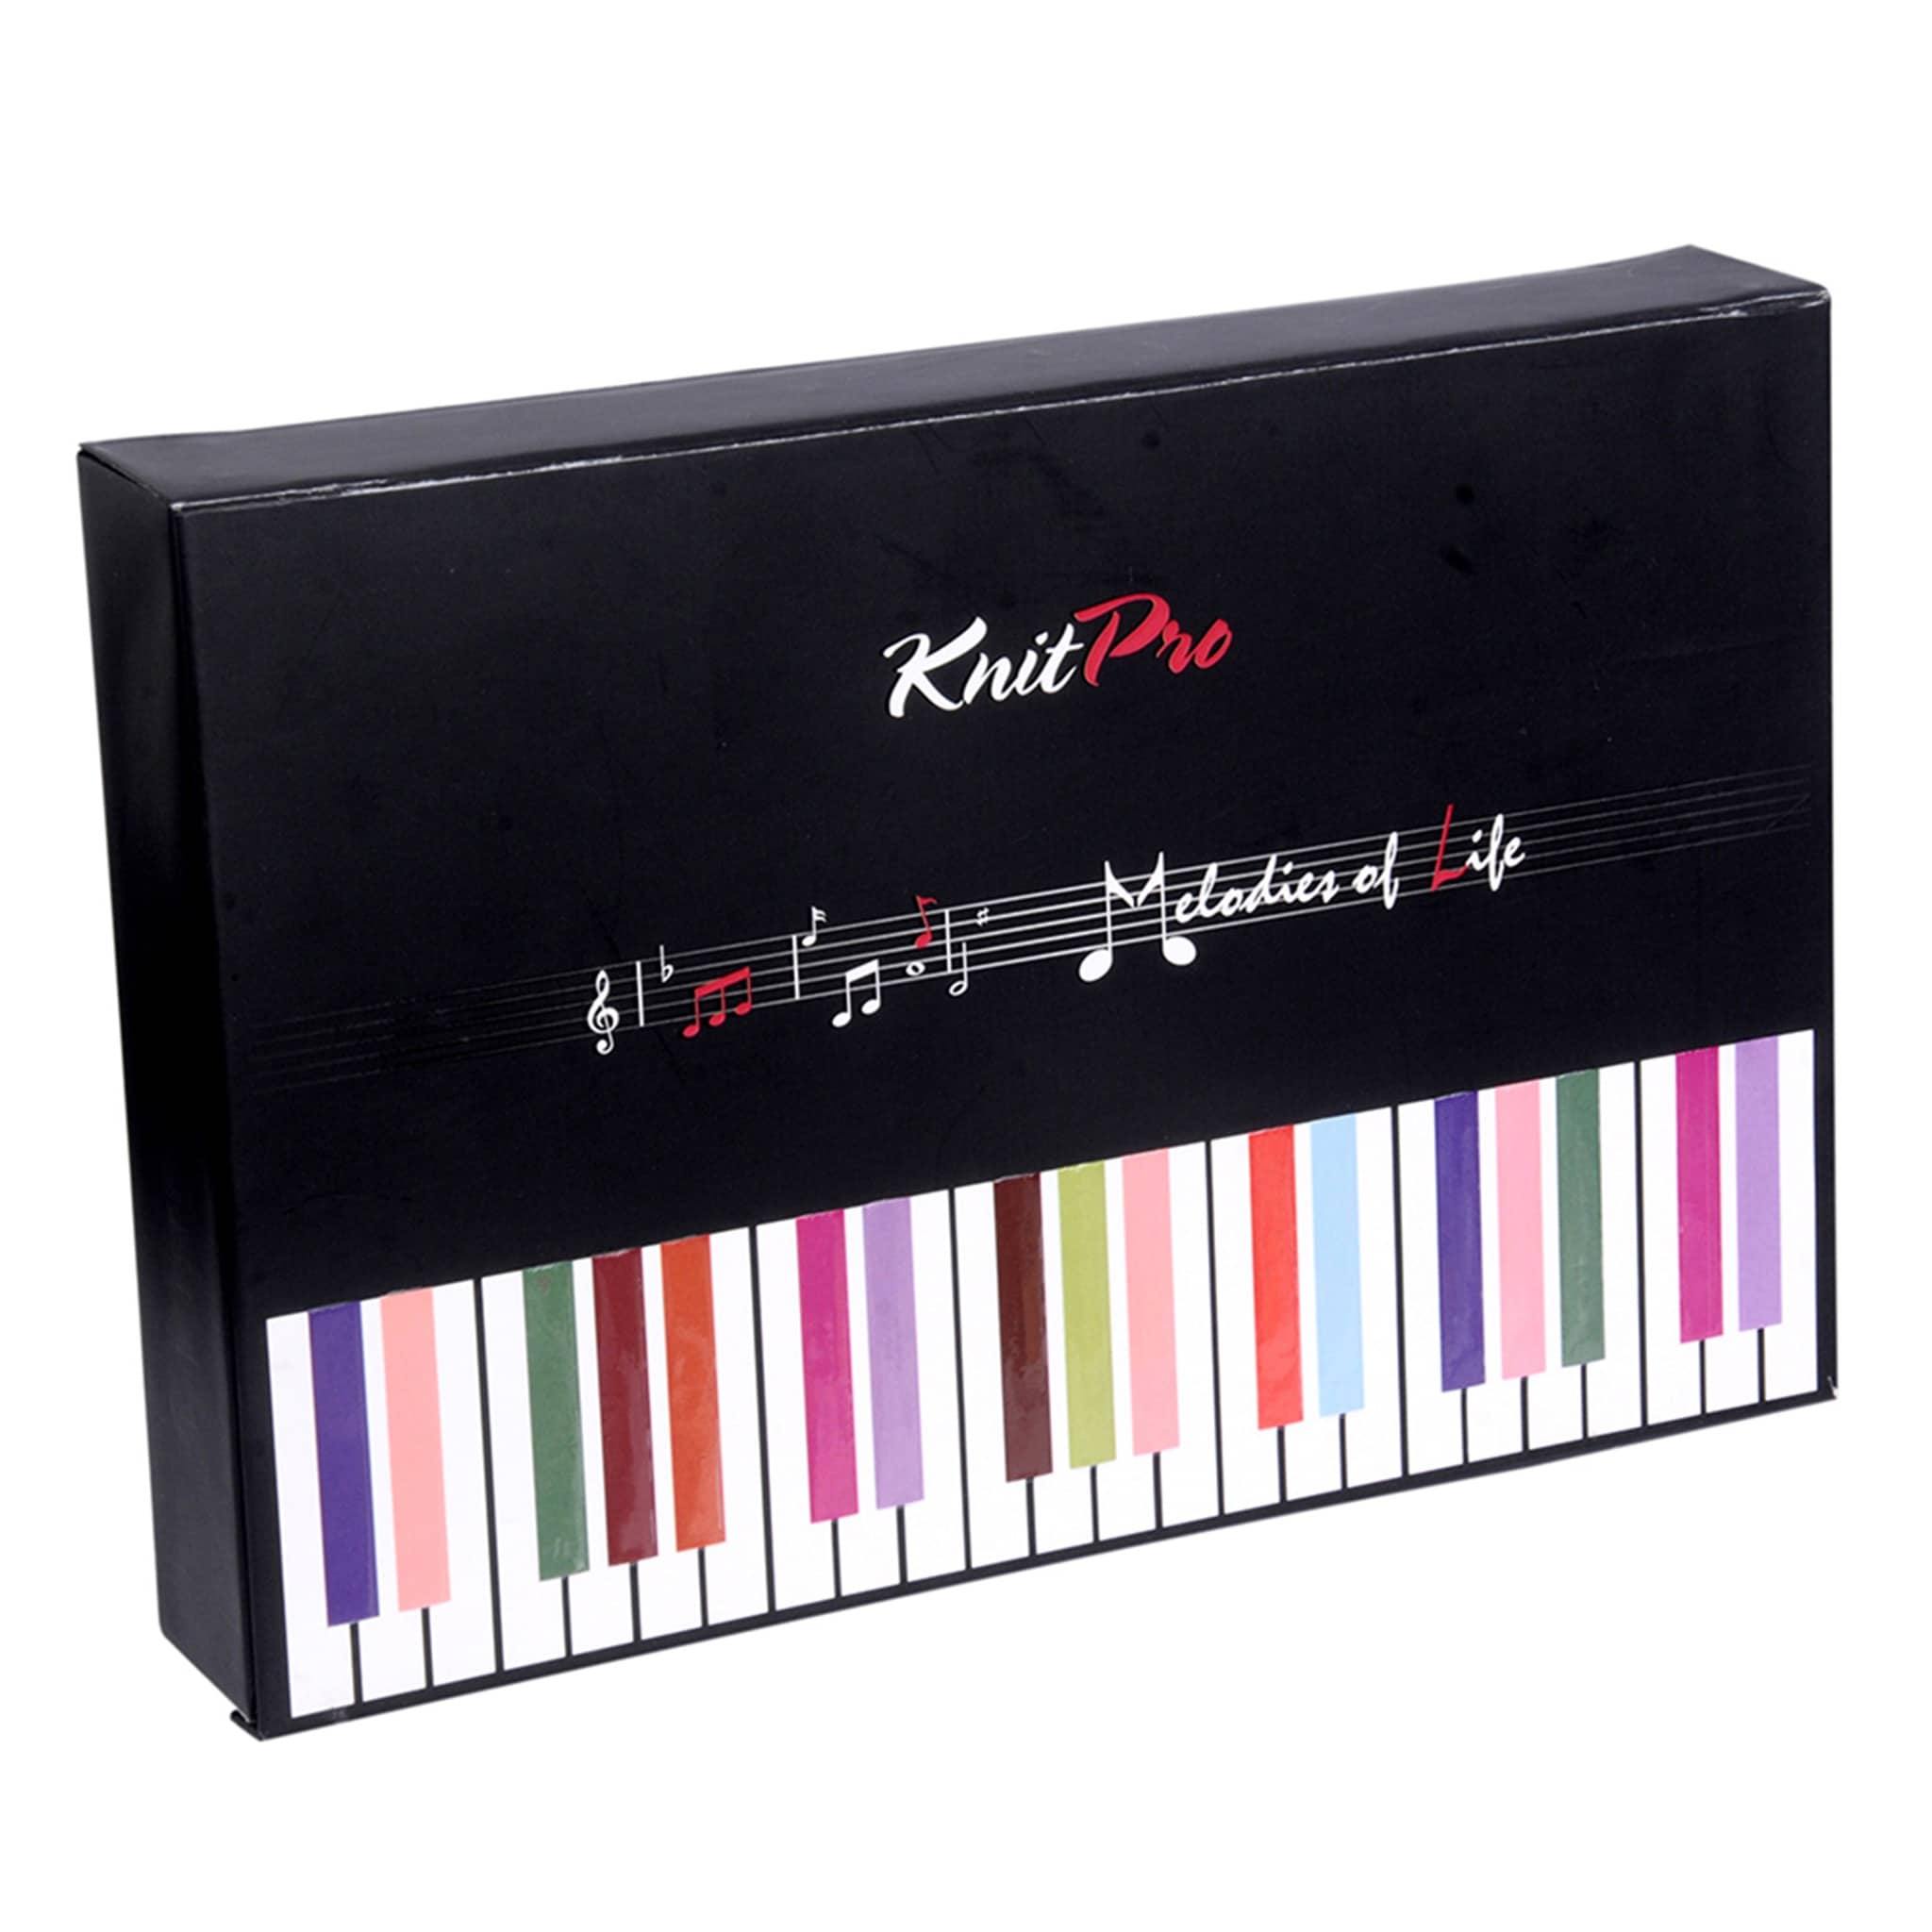 Knitpro Zing Holiday Gift Set "melodies Of Life" Knitting Pins Circular Interchangeable - Woolshop.co.uk